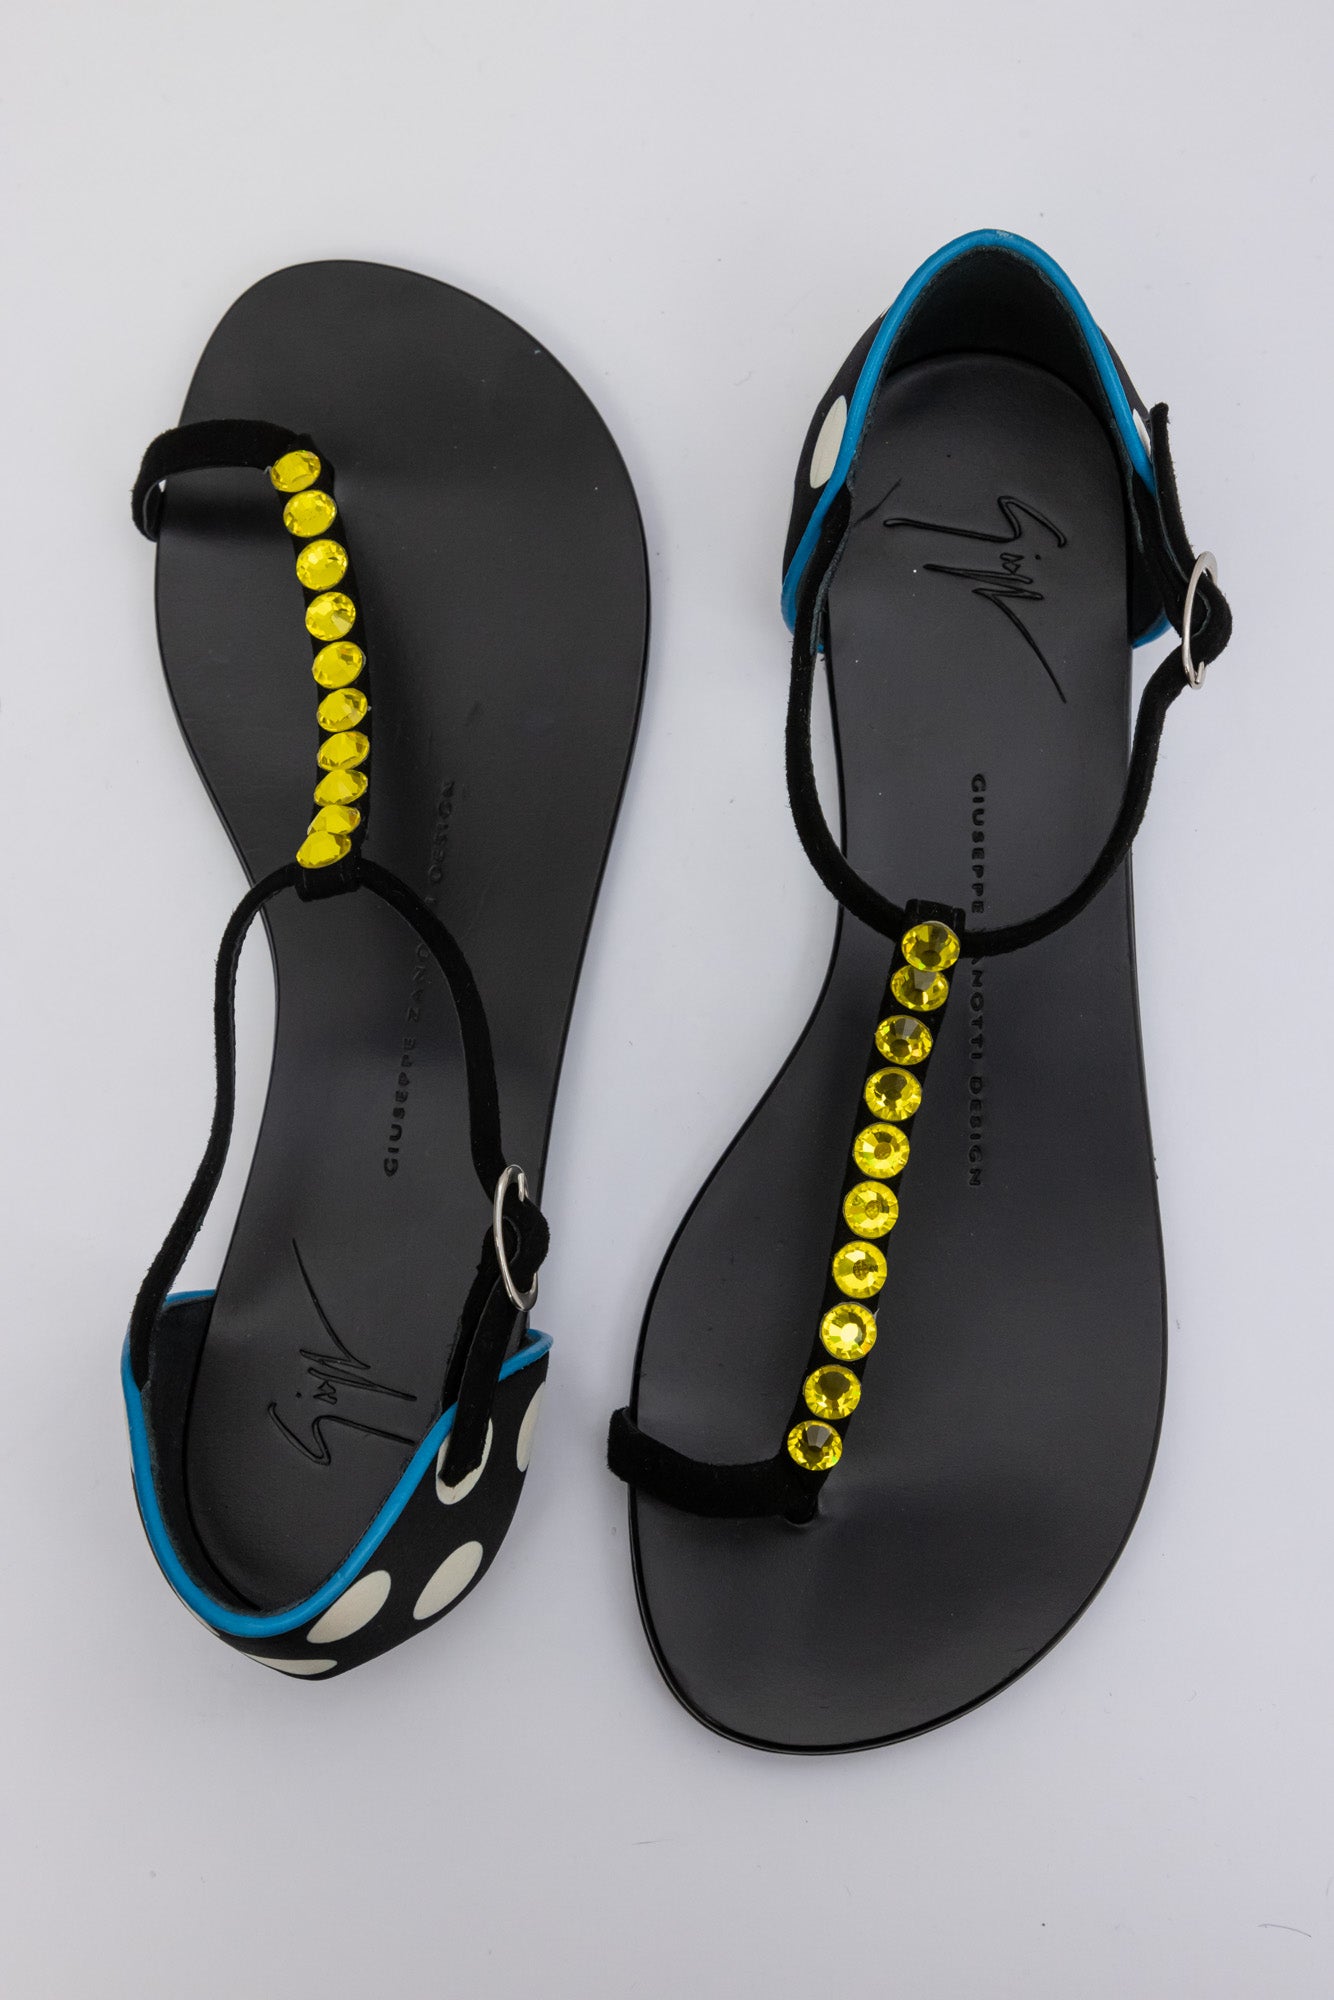 Giuseppe Zanotti Black Polka Dot and Cheetah Print Flat Sandal | Size IT 37.5 | Made in Italy